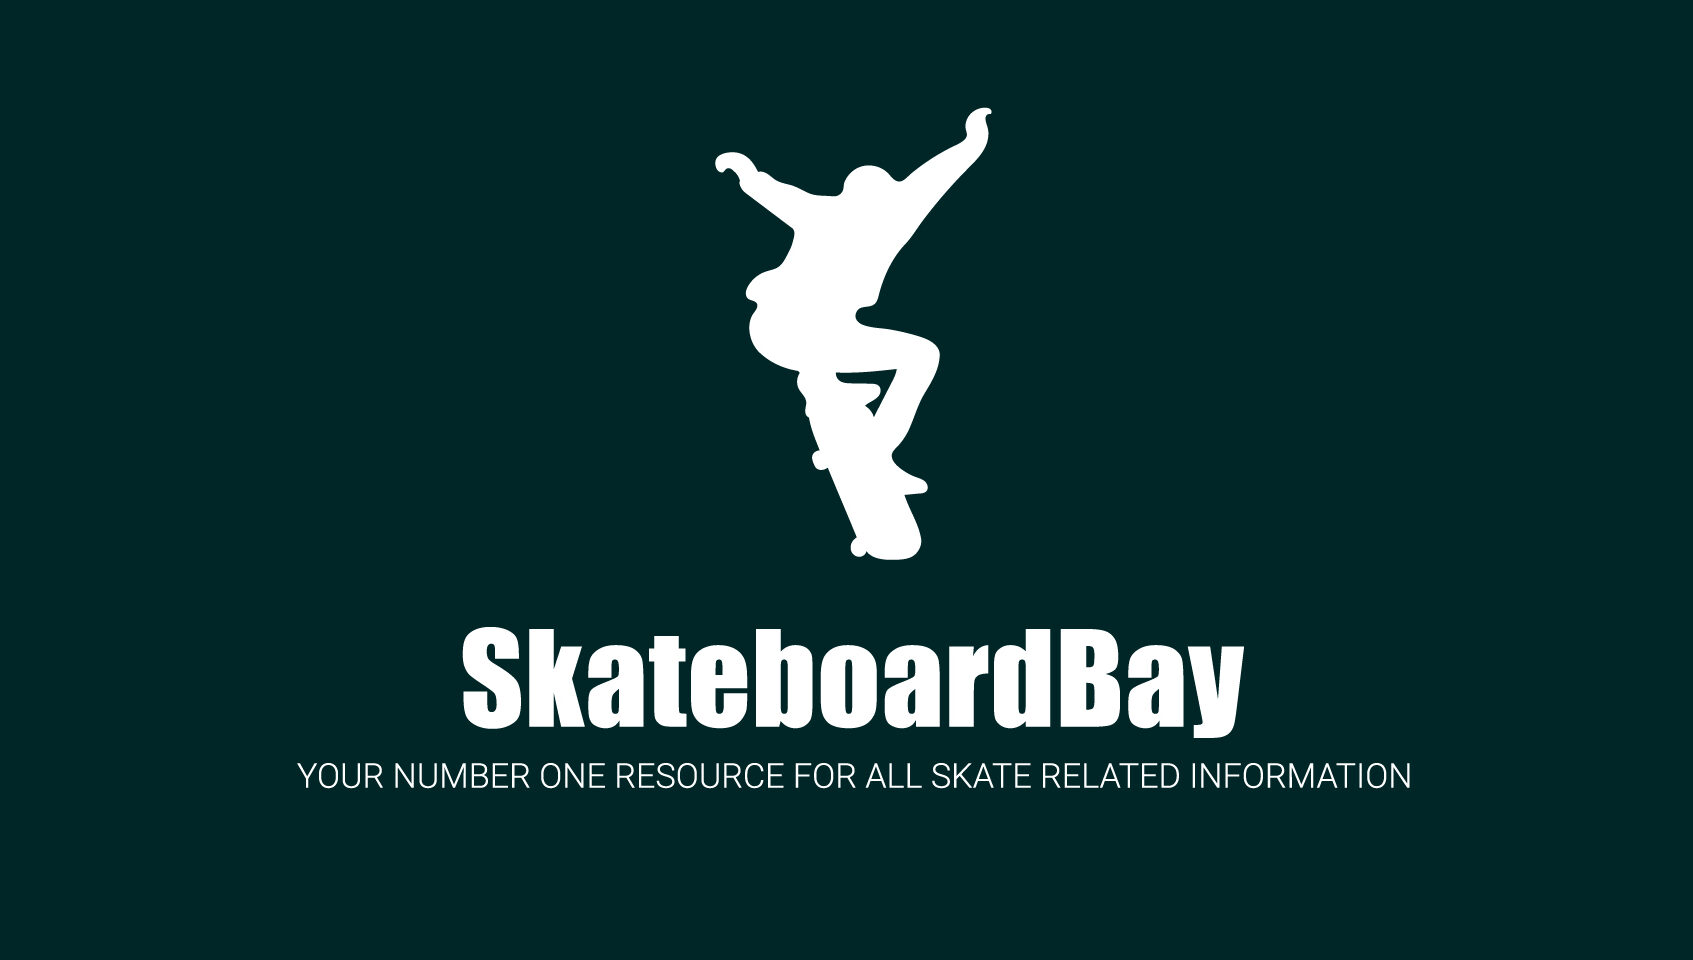 Skateboardbay.com